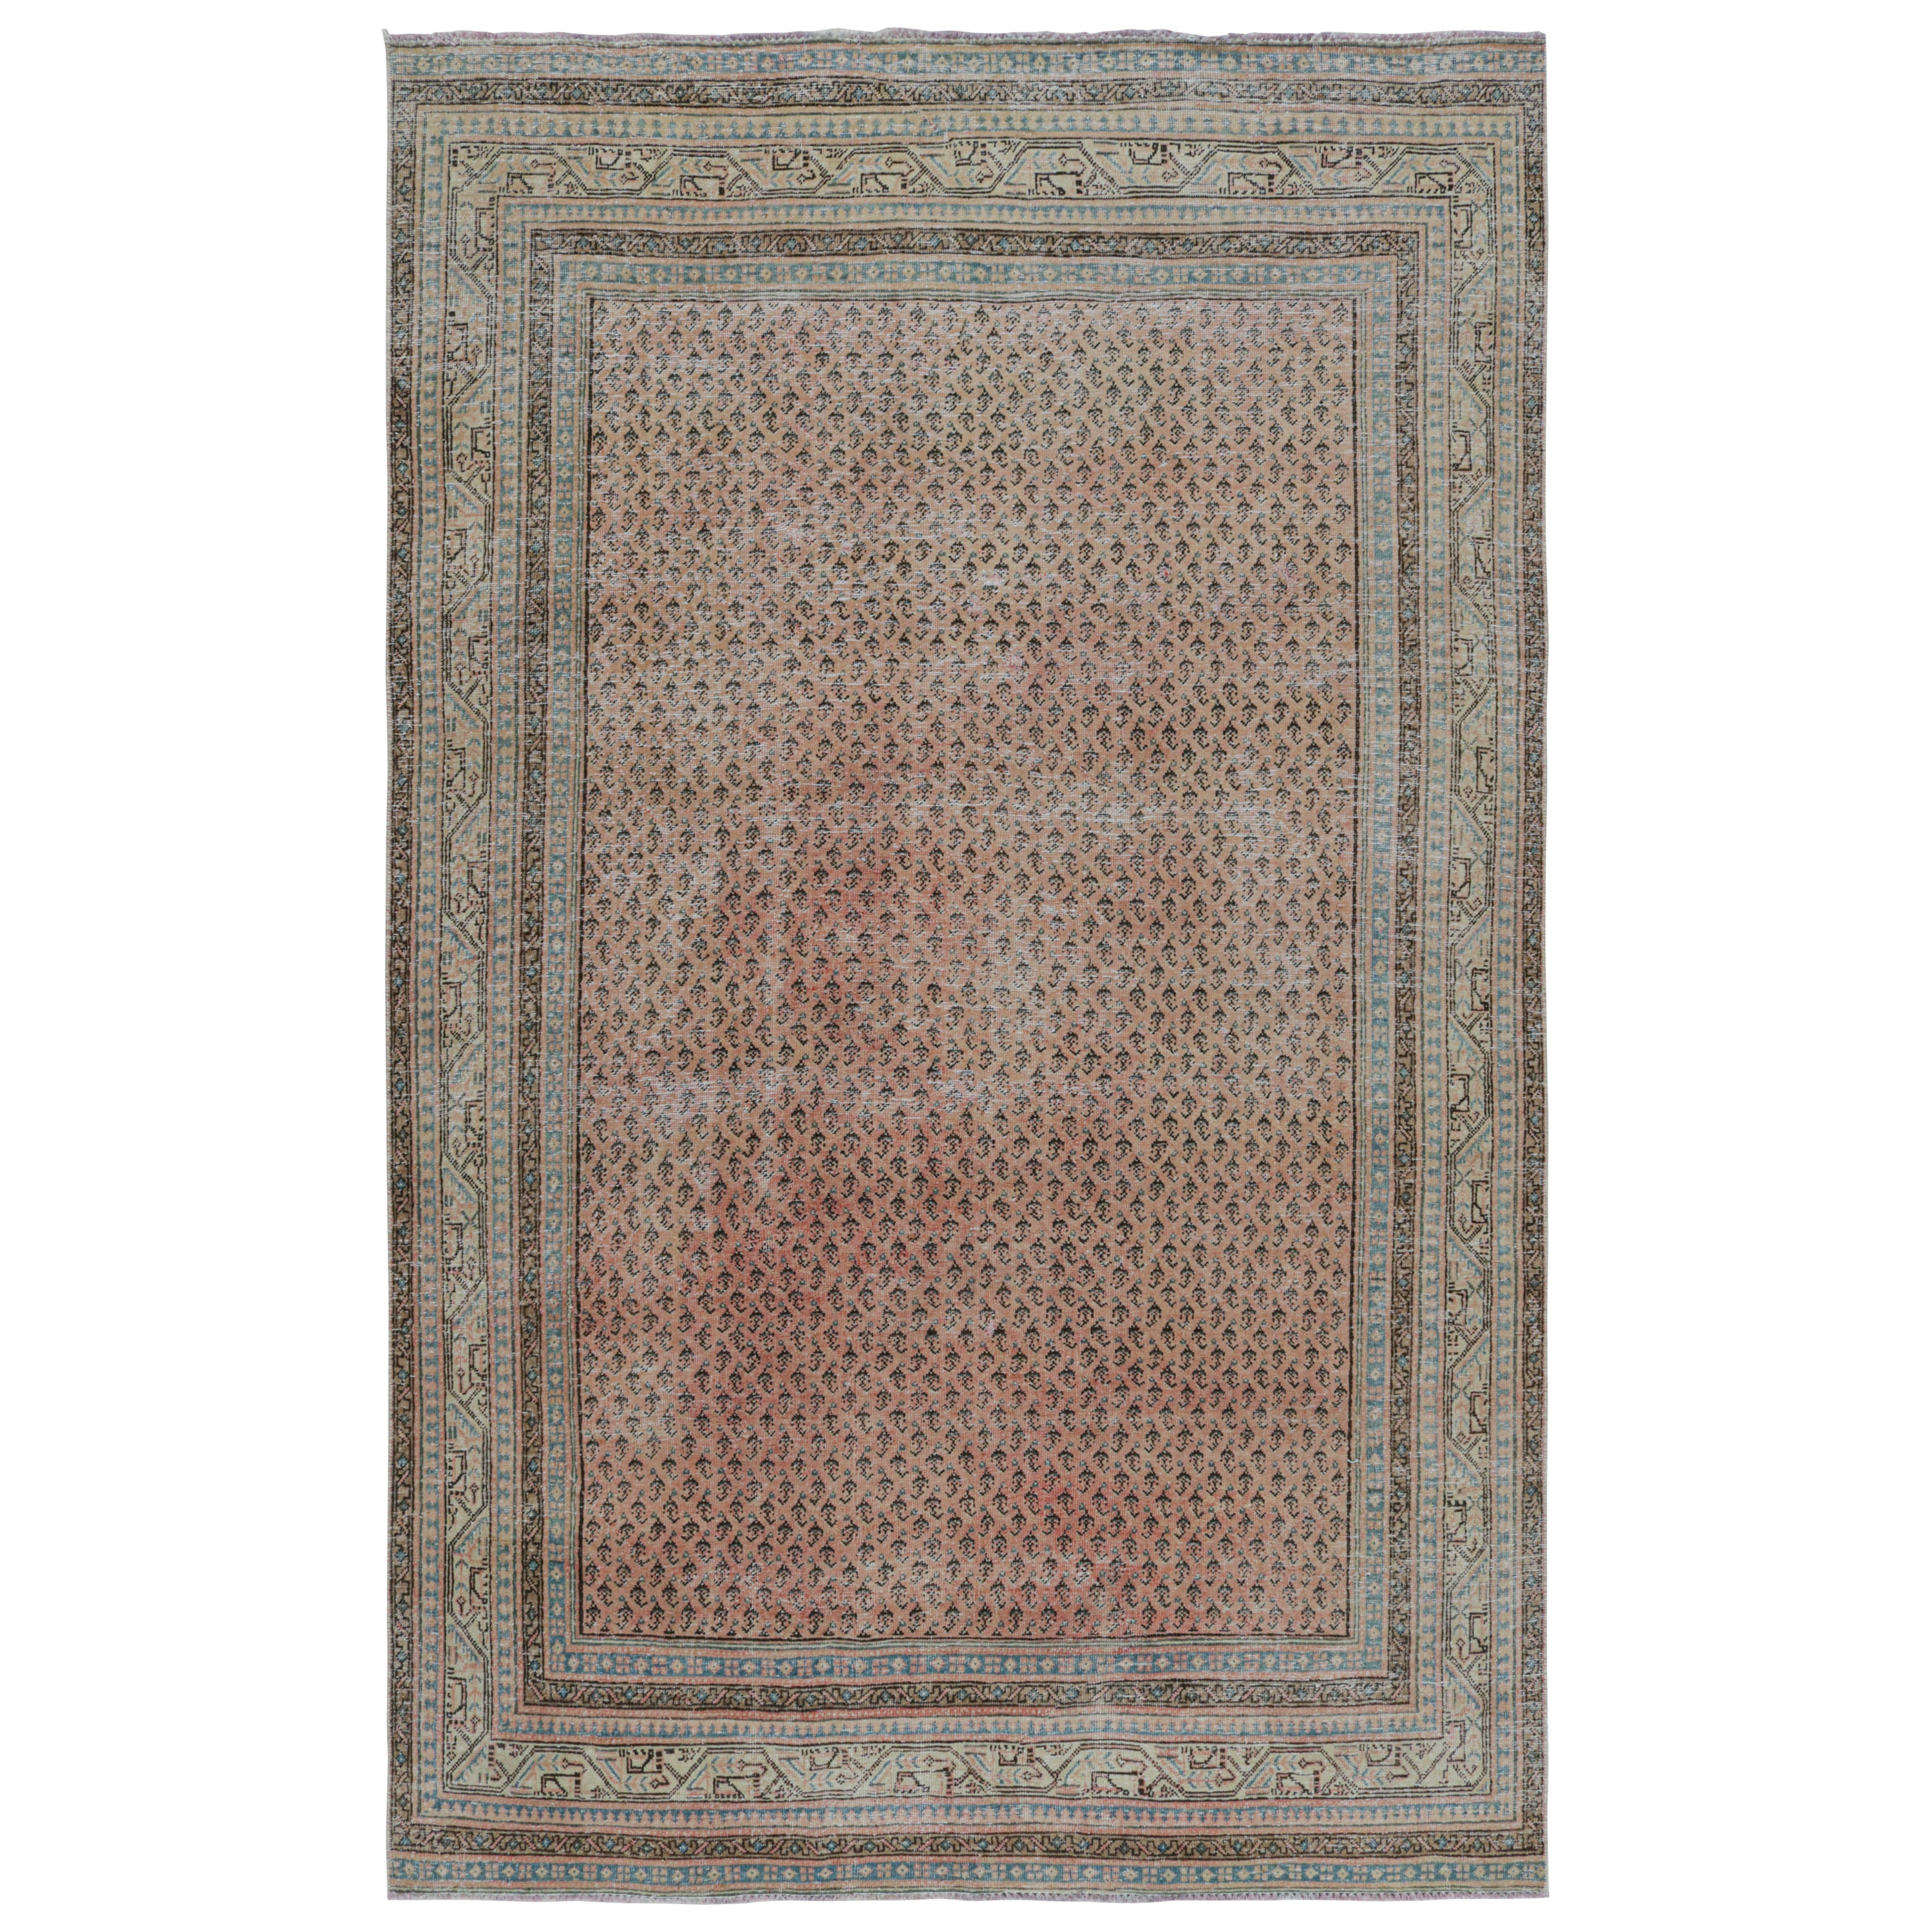 Vintage Tabriz rug with Beige, Brown and Blue Patterns by Rug & Kilim For Sale